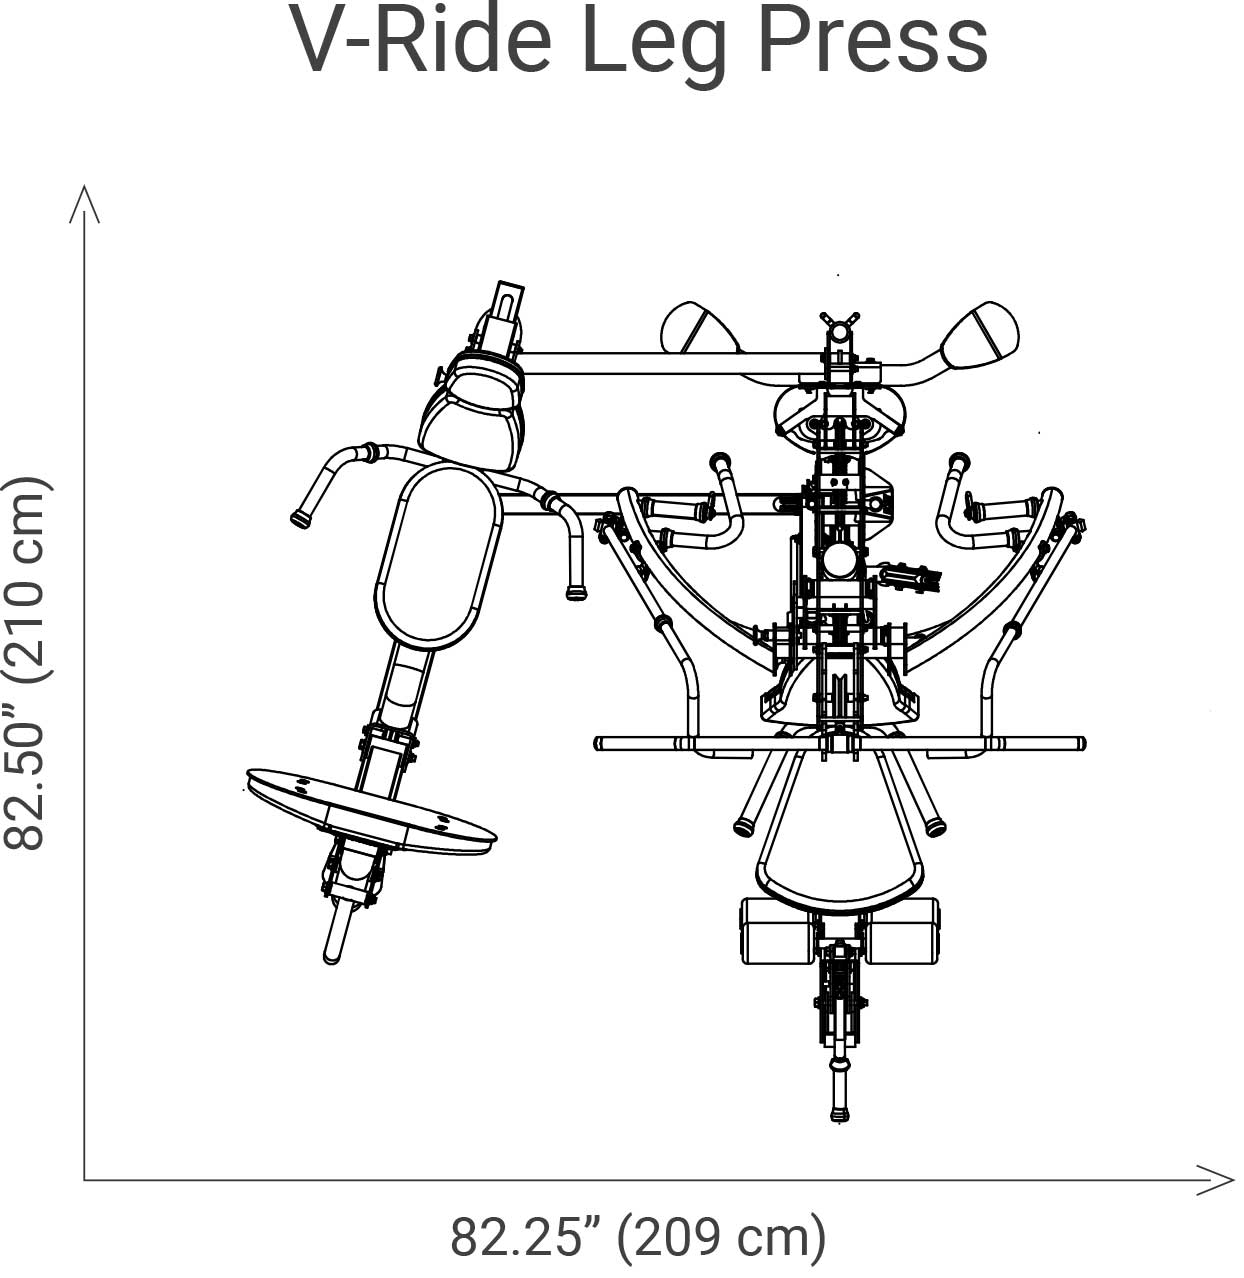 V-Ride Leg Press